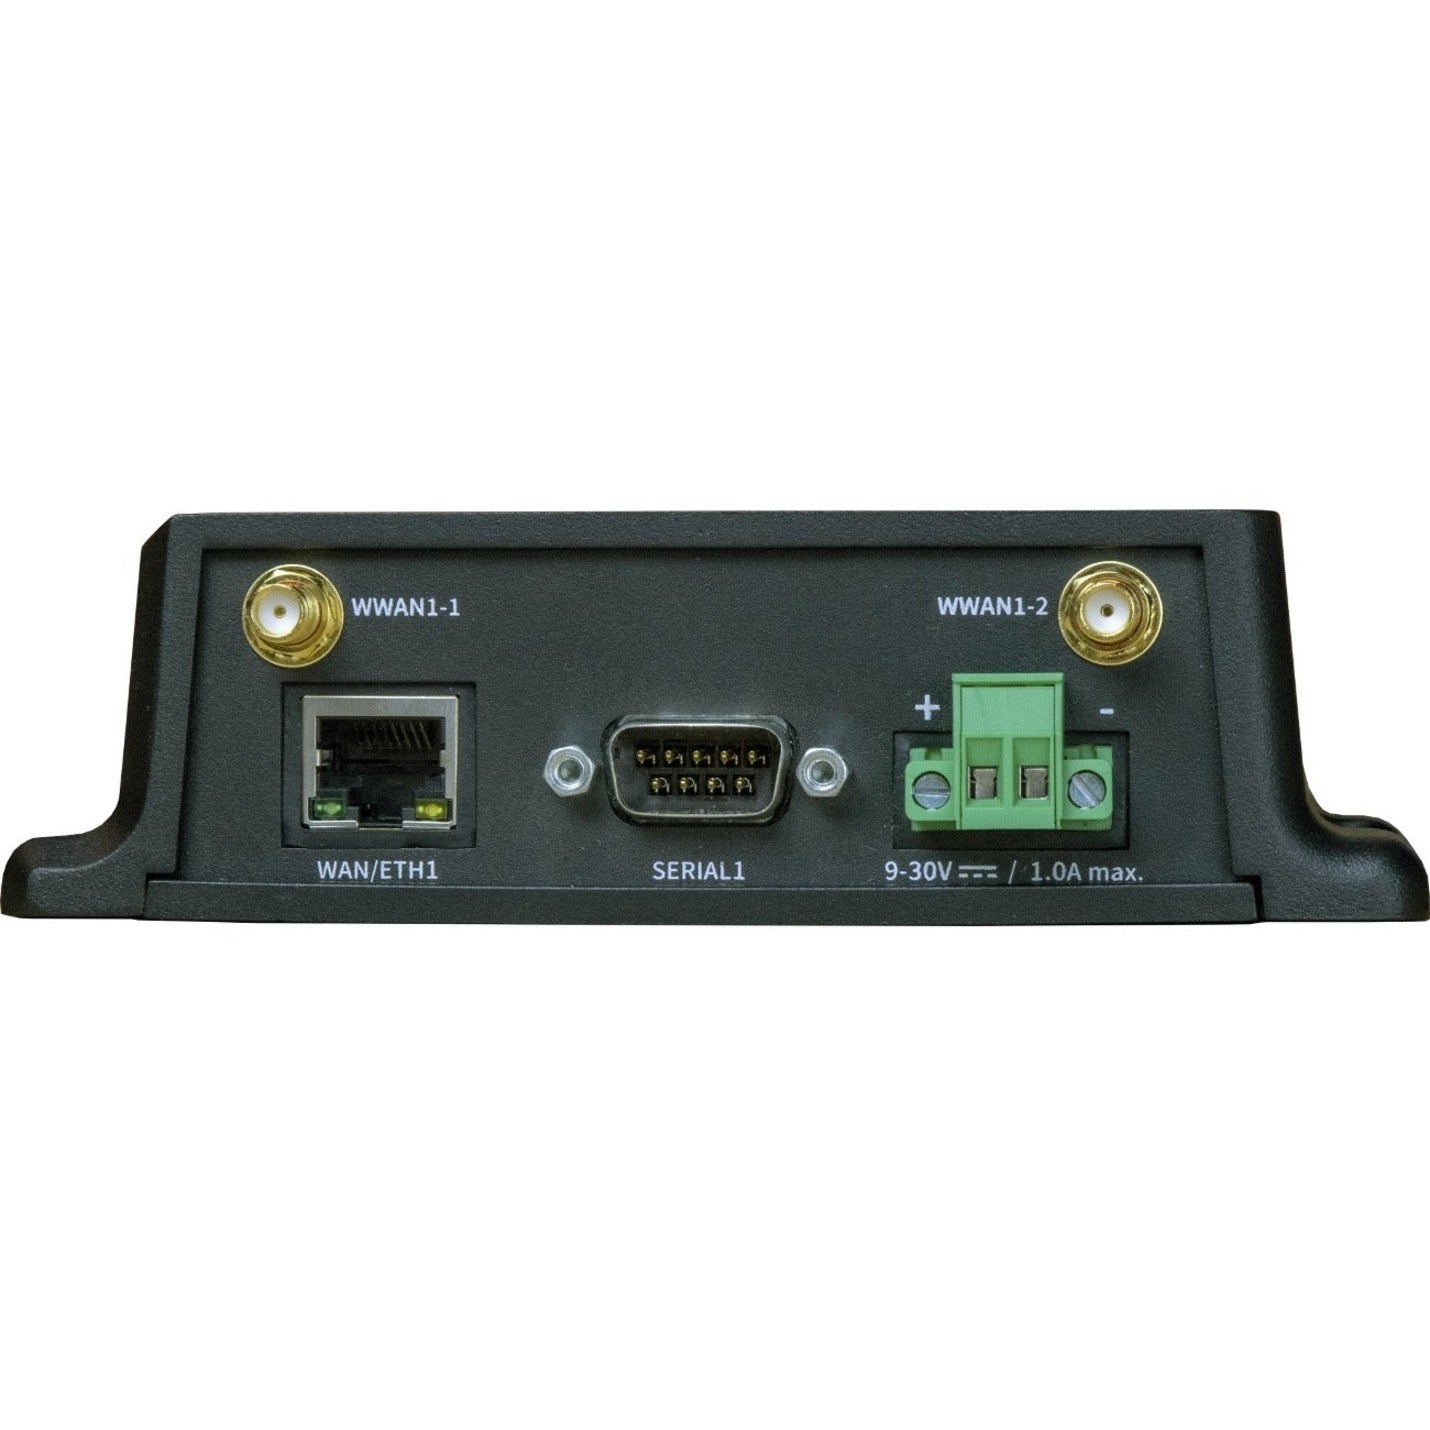 Digi IX14 2 SIM Cellular Ethernet Modem/Wireless Router